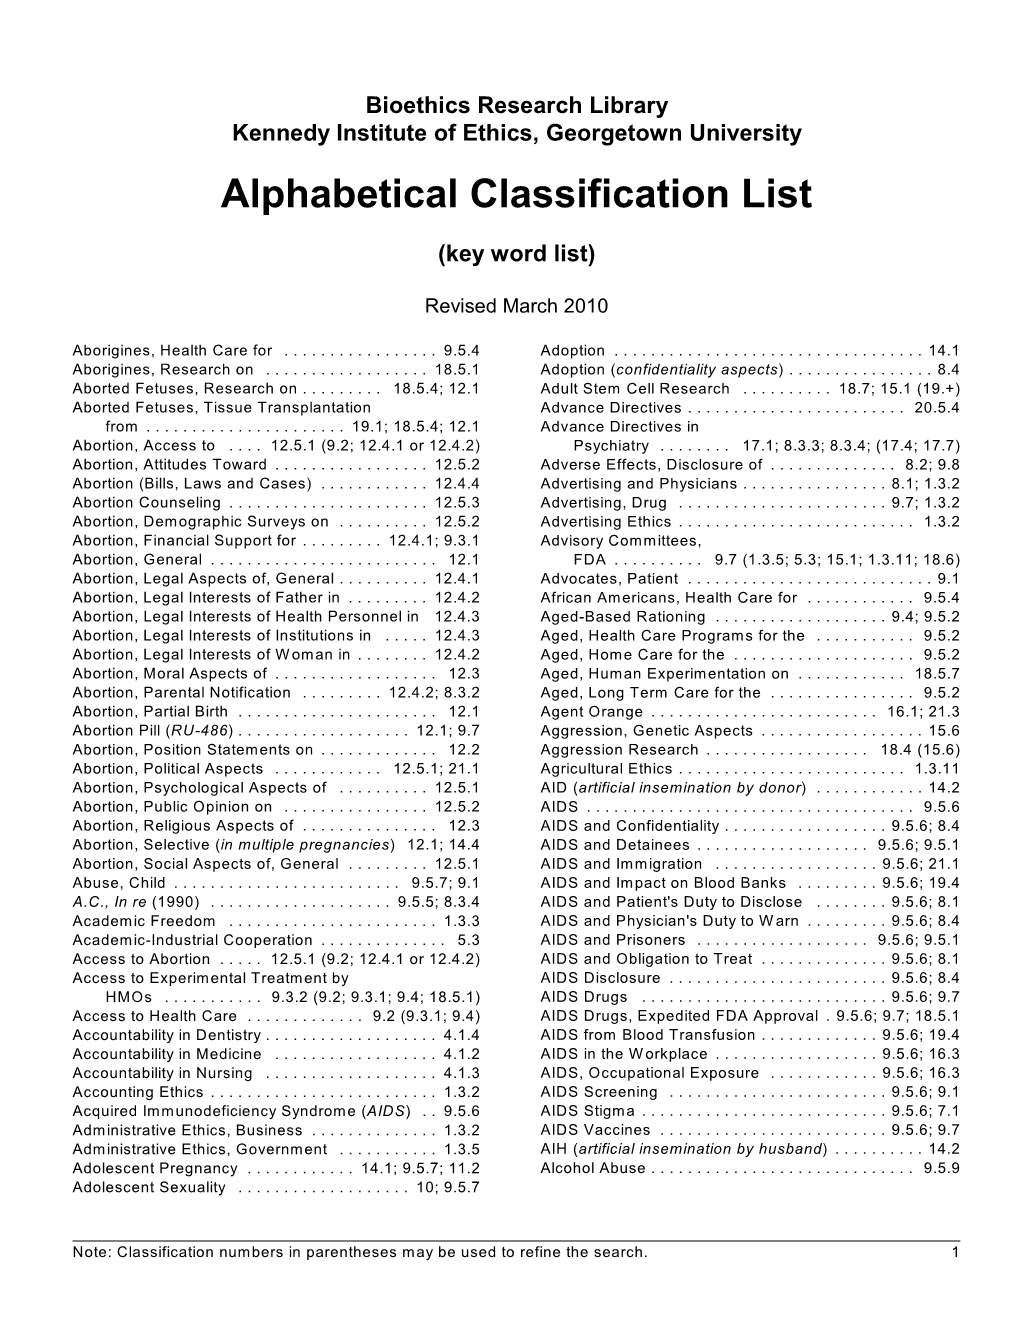 Alphabetical Classification List